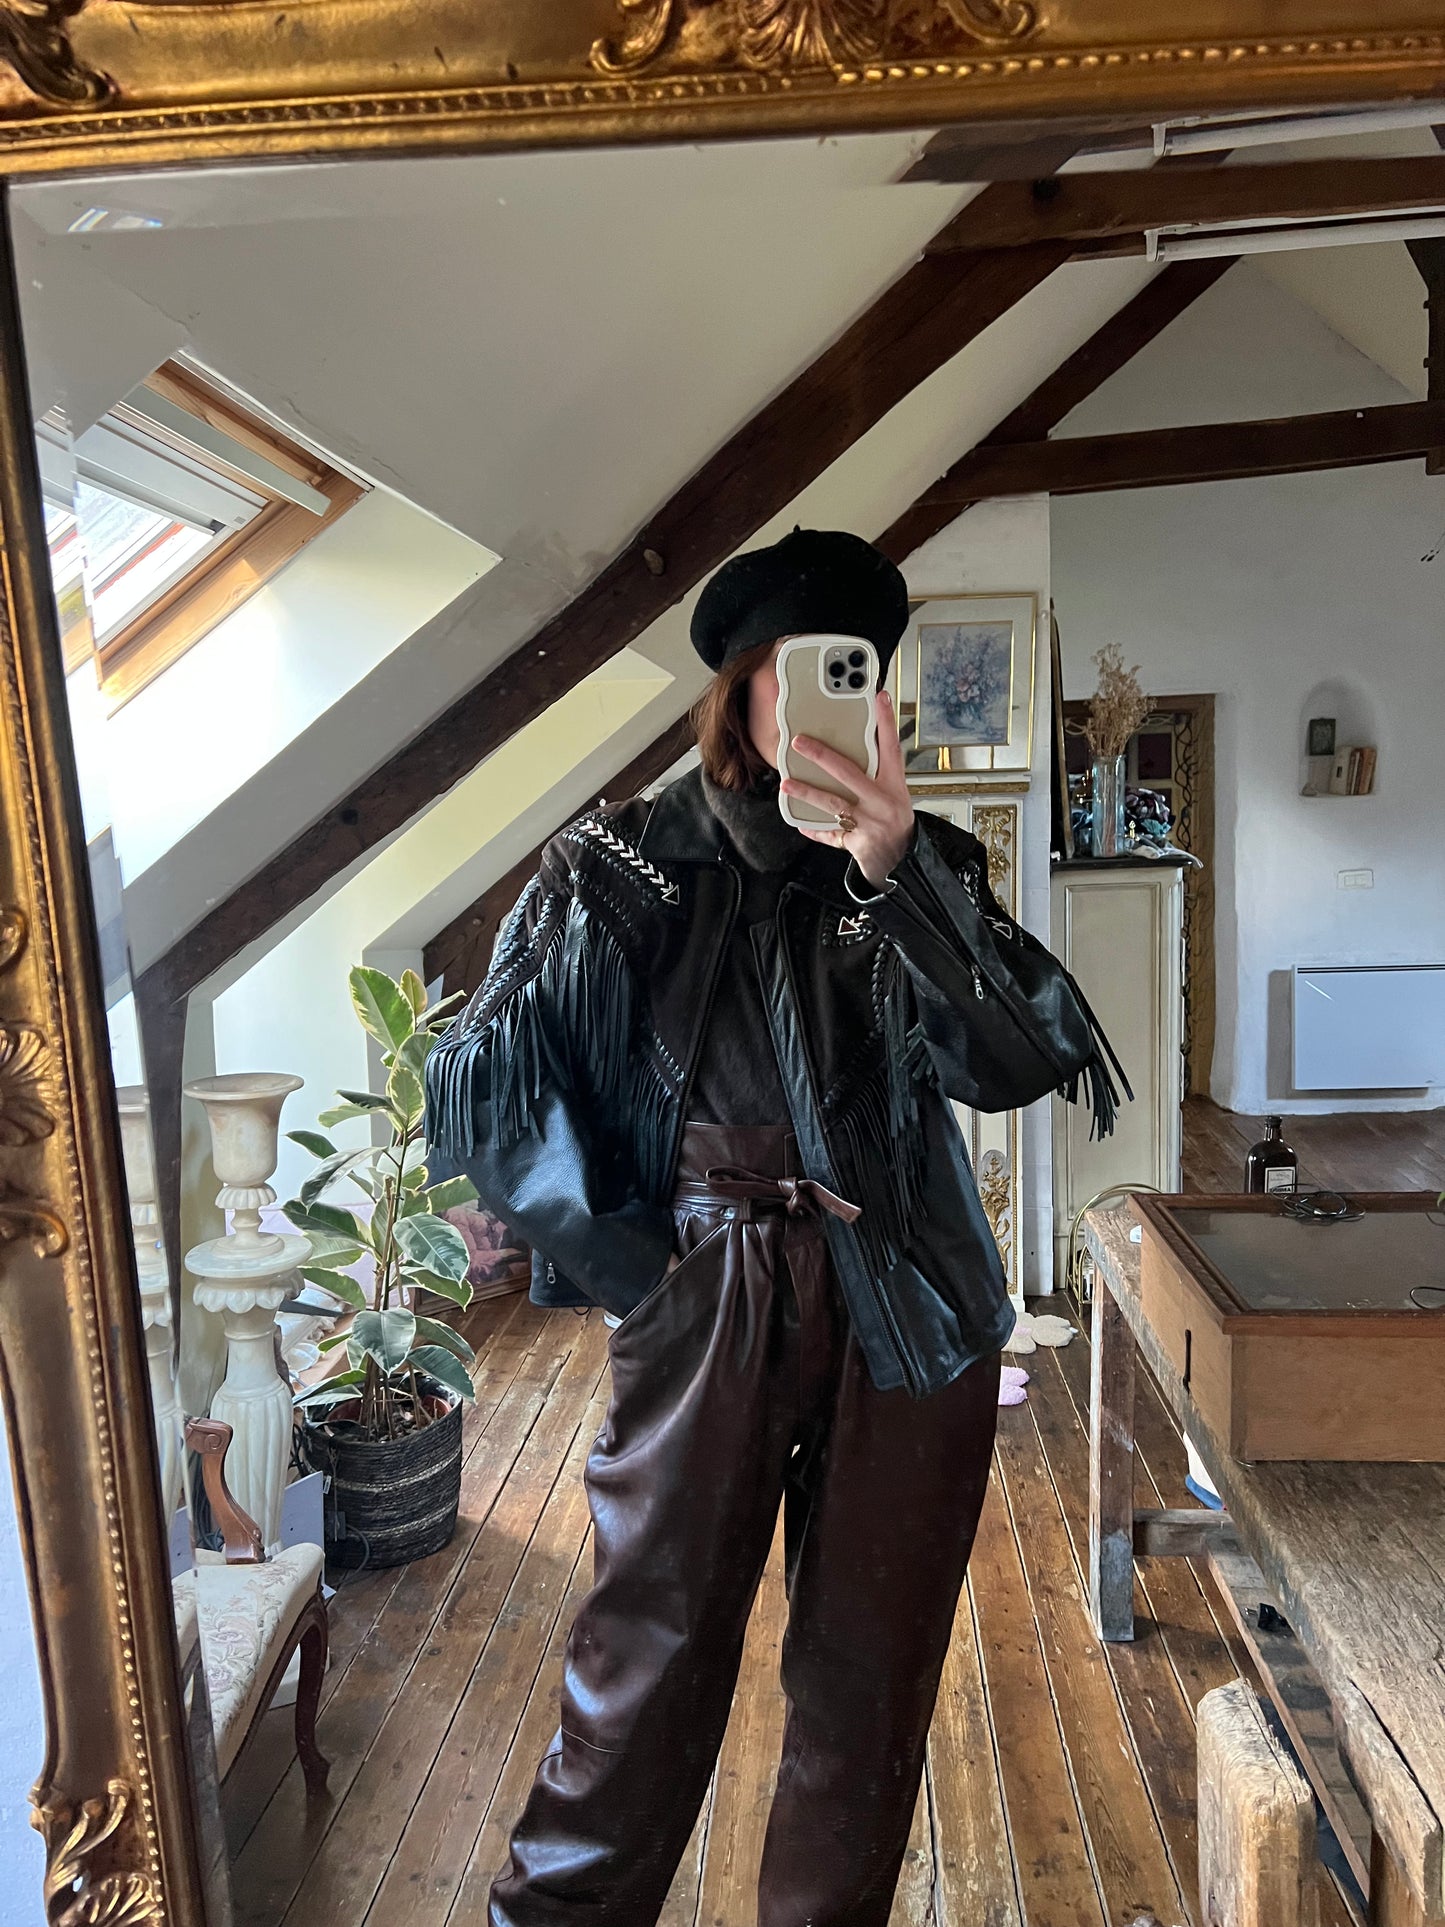 Leather Jacket with Fringes